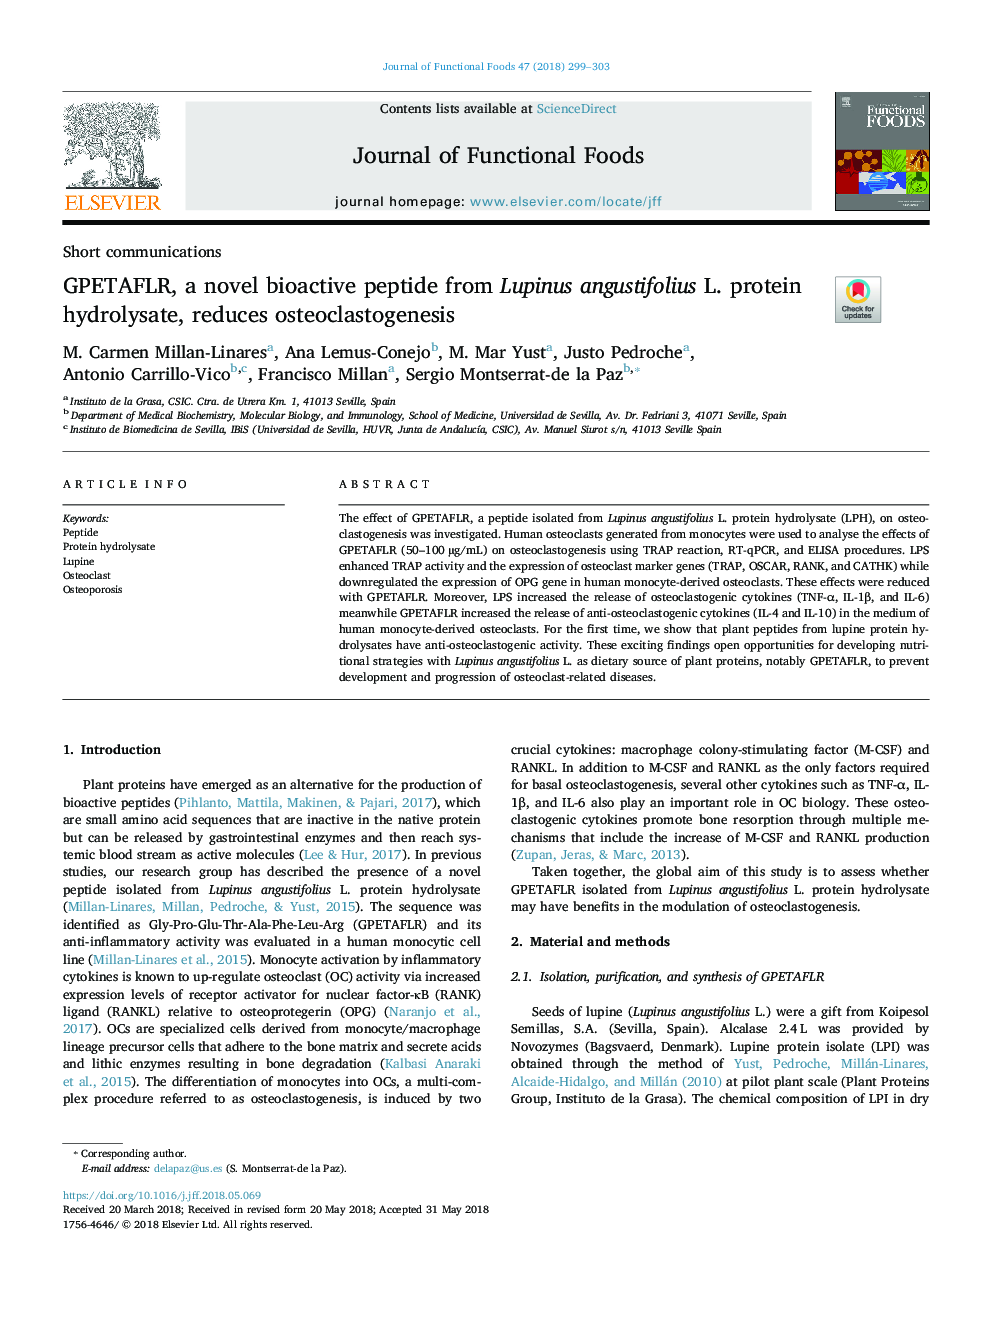 GPETAFLR, a novel bioactive peptide from Lupinus angustifolius L. protein hydrolysate, reduces osteoclastogenesis